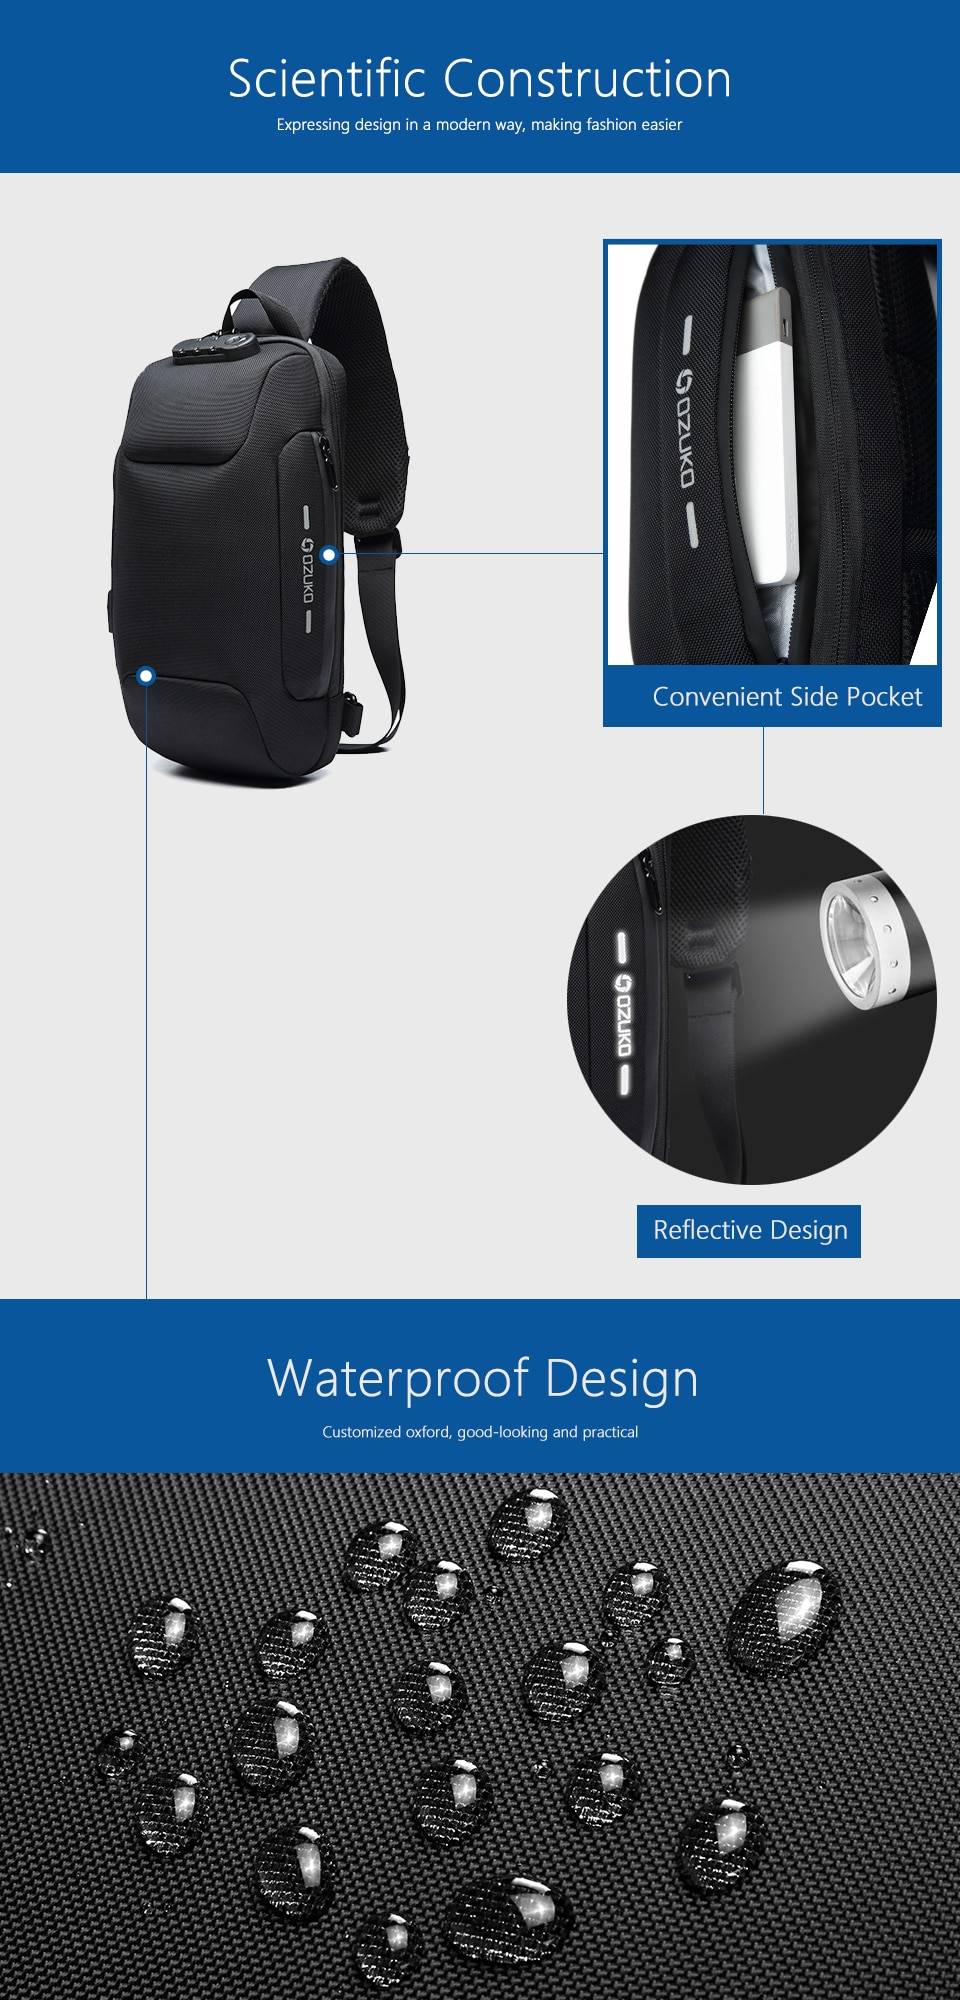 OZUKO 2019 New Multifunction Crossbody Bag for Men Anti-theft Shoulder Messenger Bags Male Waterproof Short Trip Chest Bag Pack